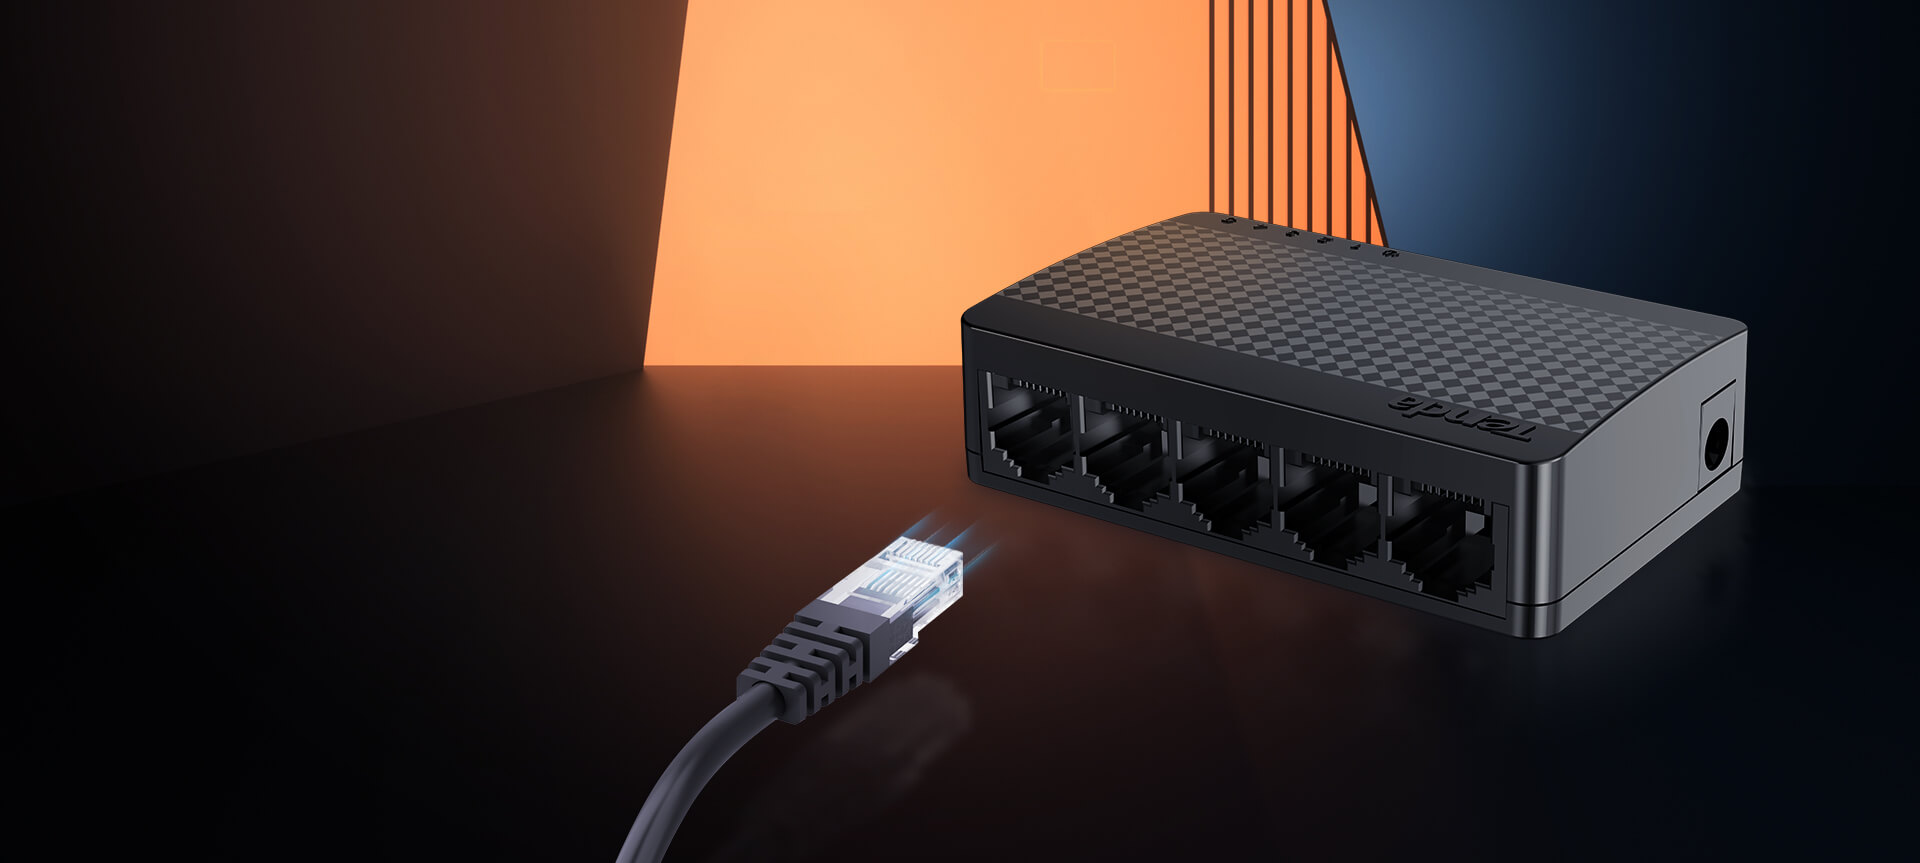 Switch Ethernet 5 Ports Gigabit Tenda SG105 - Plug & Play, LED Indicators,  Mini Size(Reconditionné)